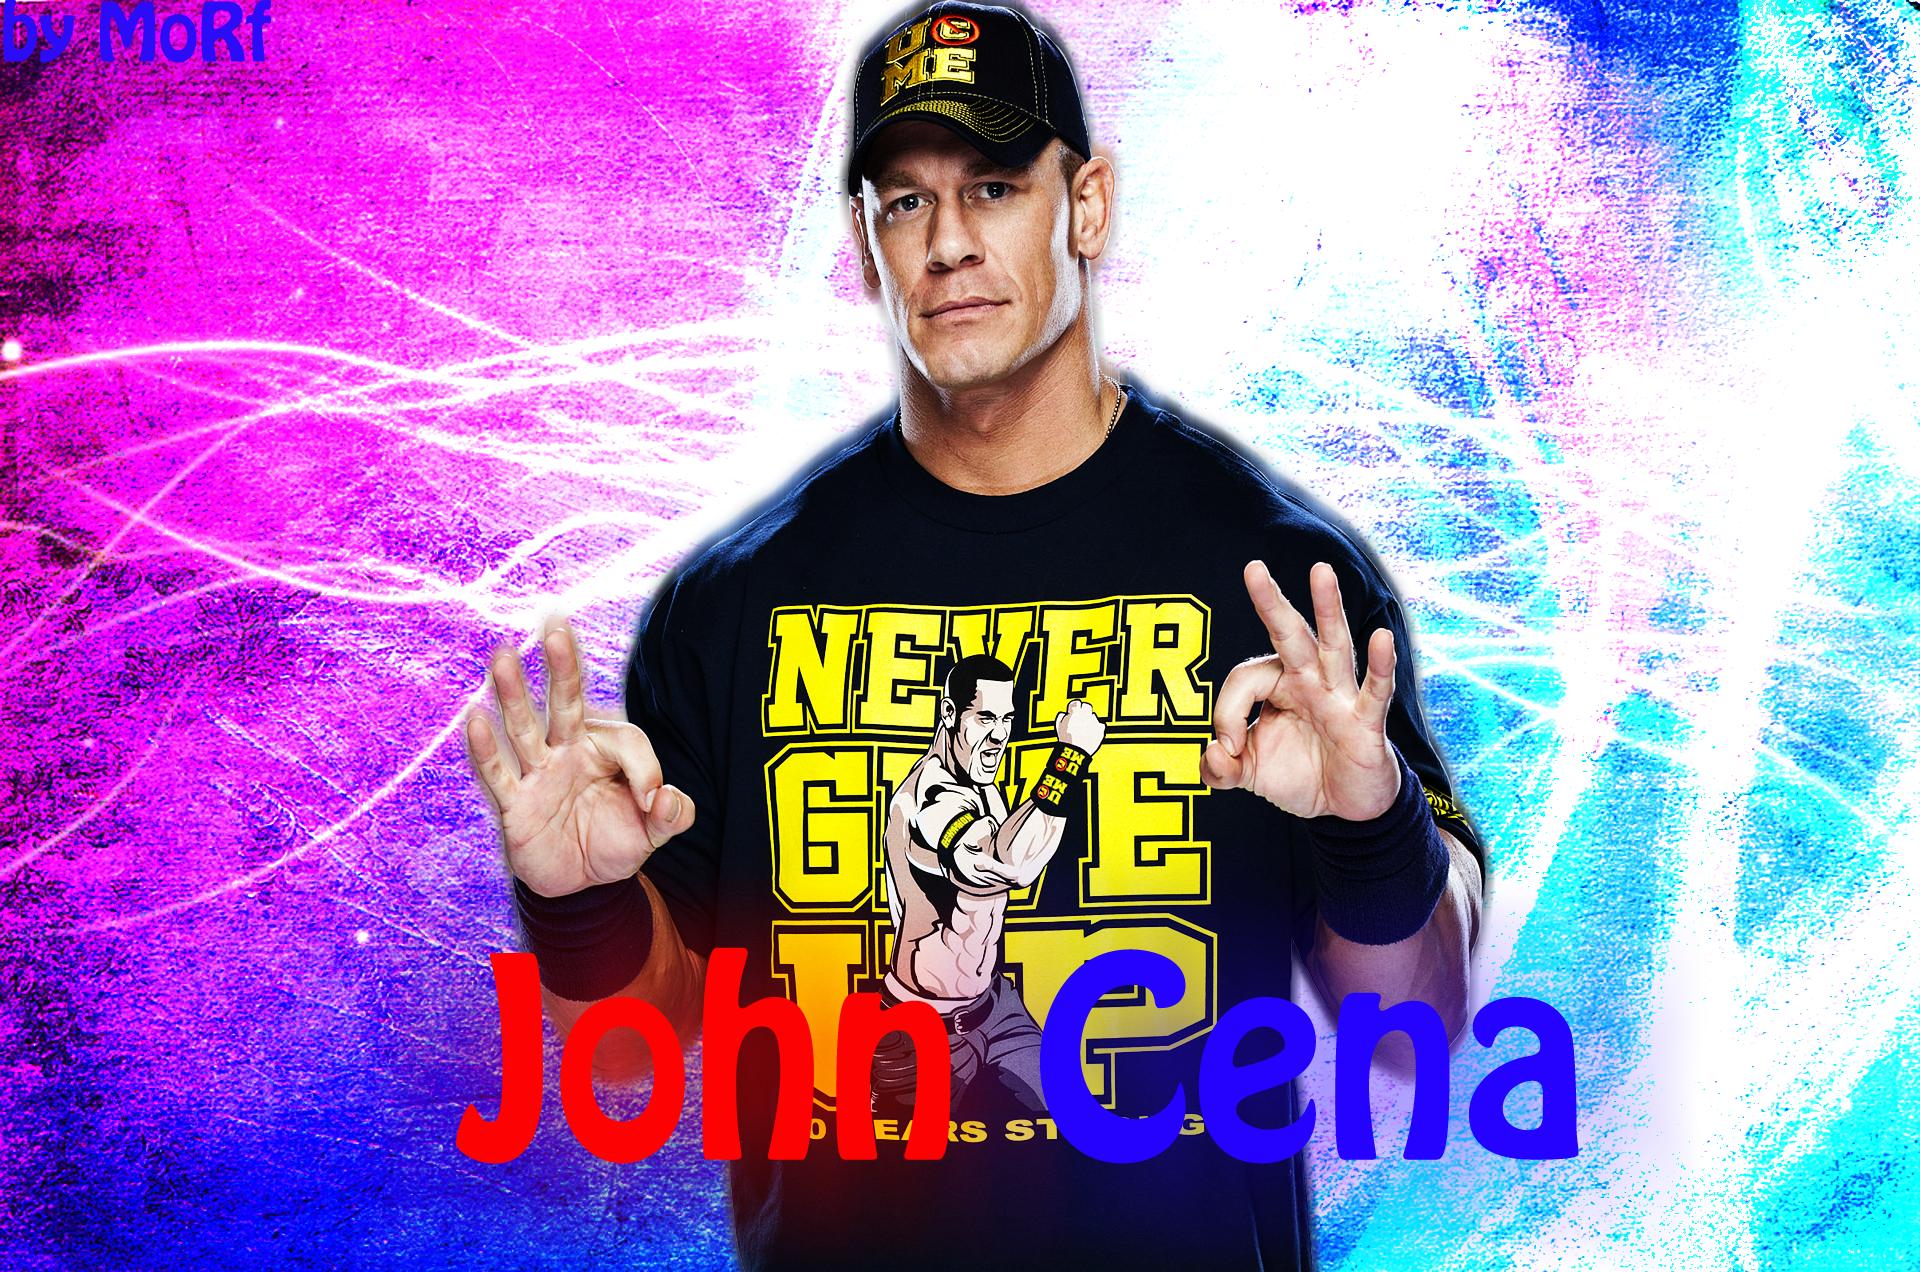 John Cena wallpapers - WWE Photo 33276573 - Fanpop